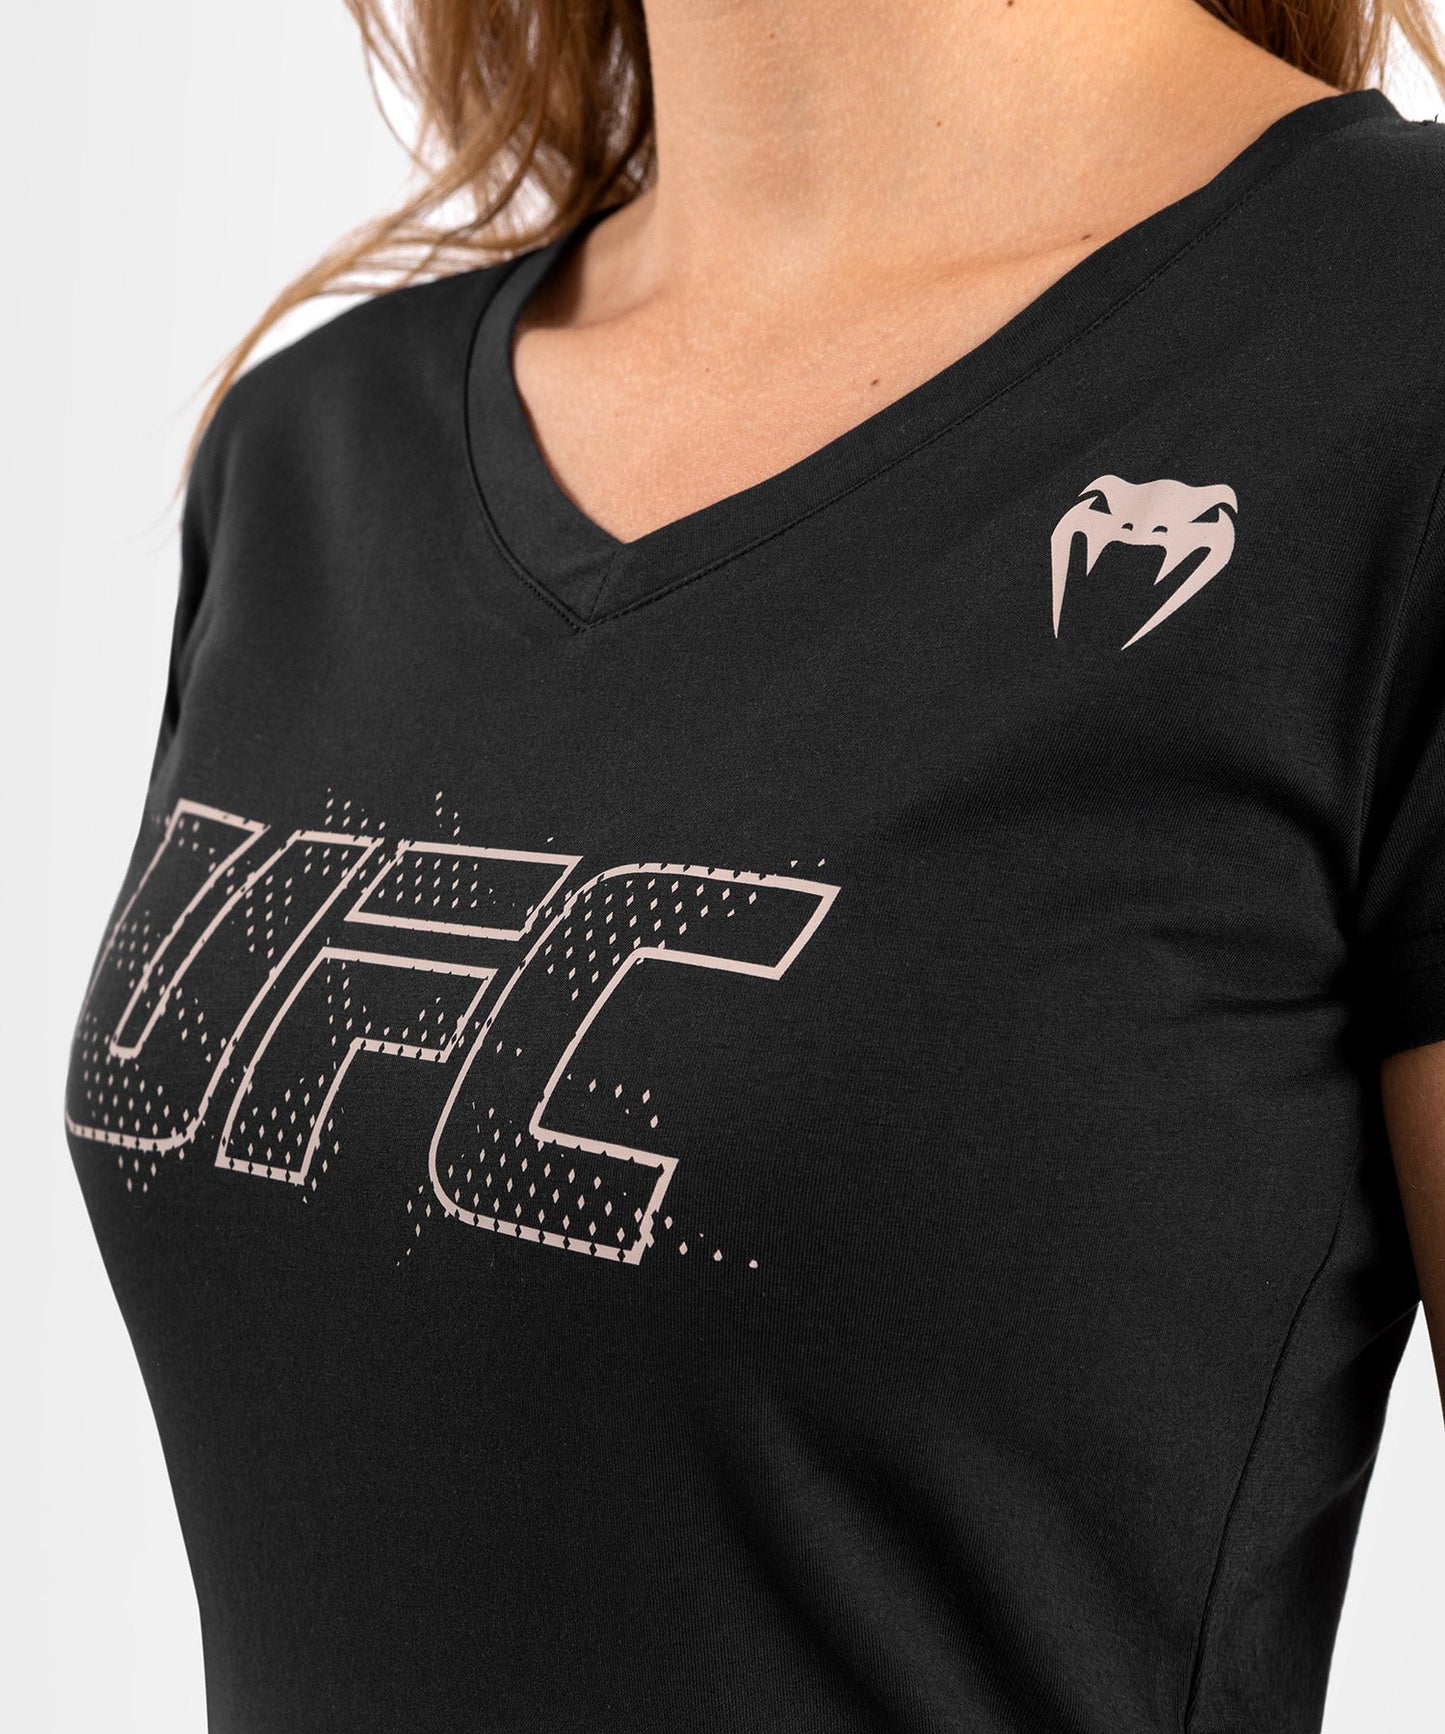 UFC Venum Authentic Fight Week 2 Women's Short Sleeve T-shirt - Black